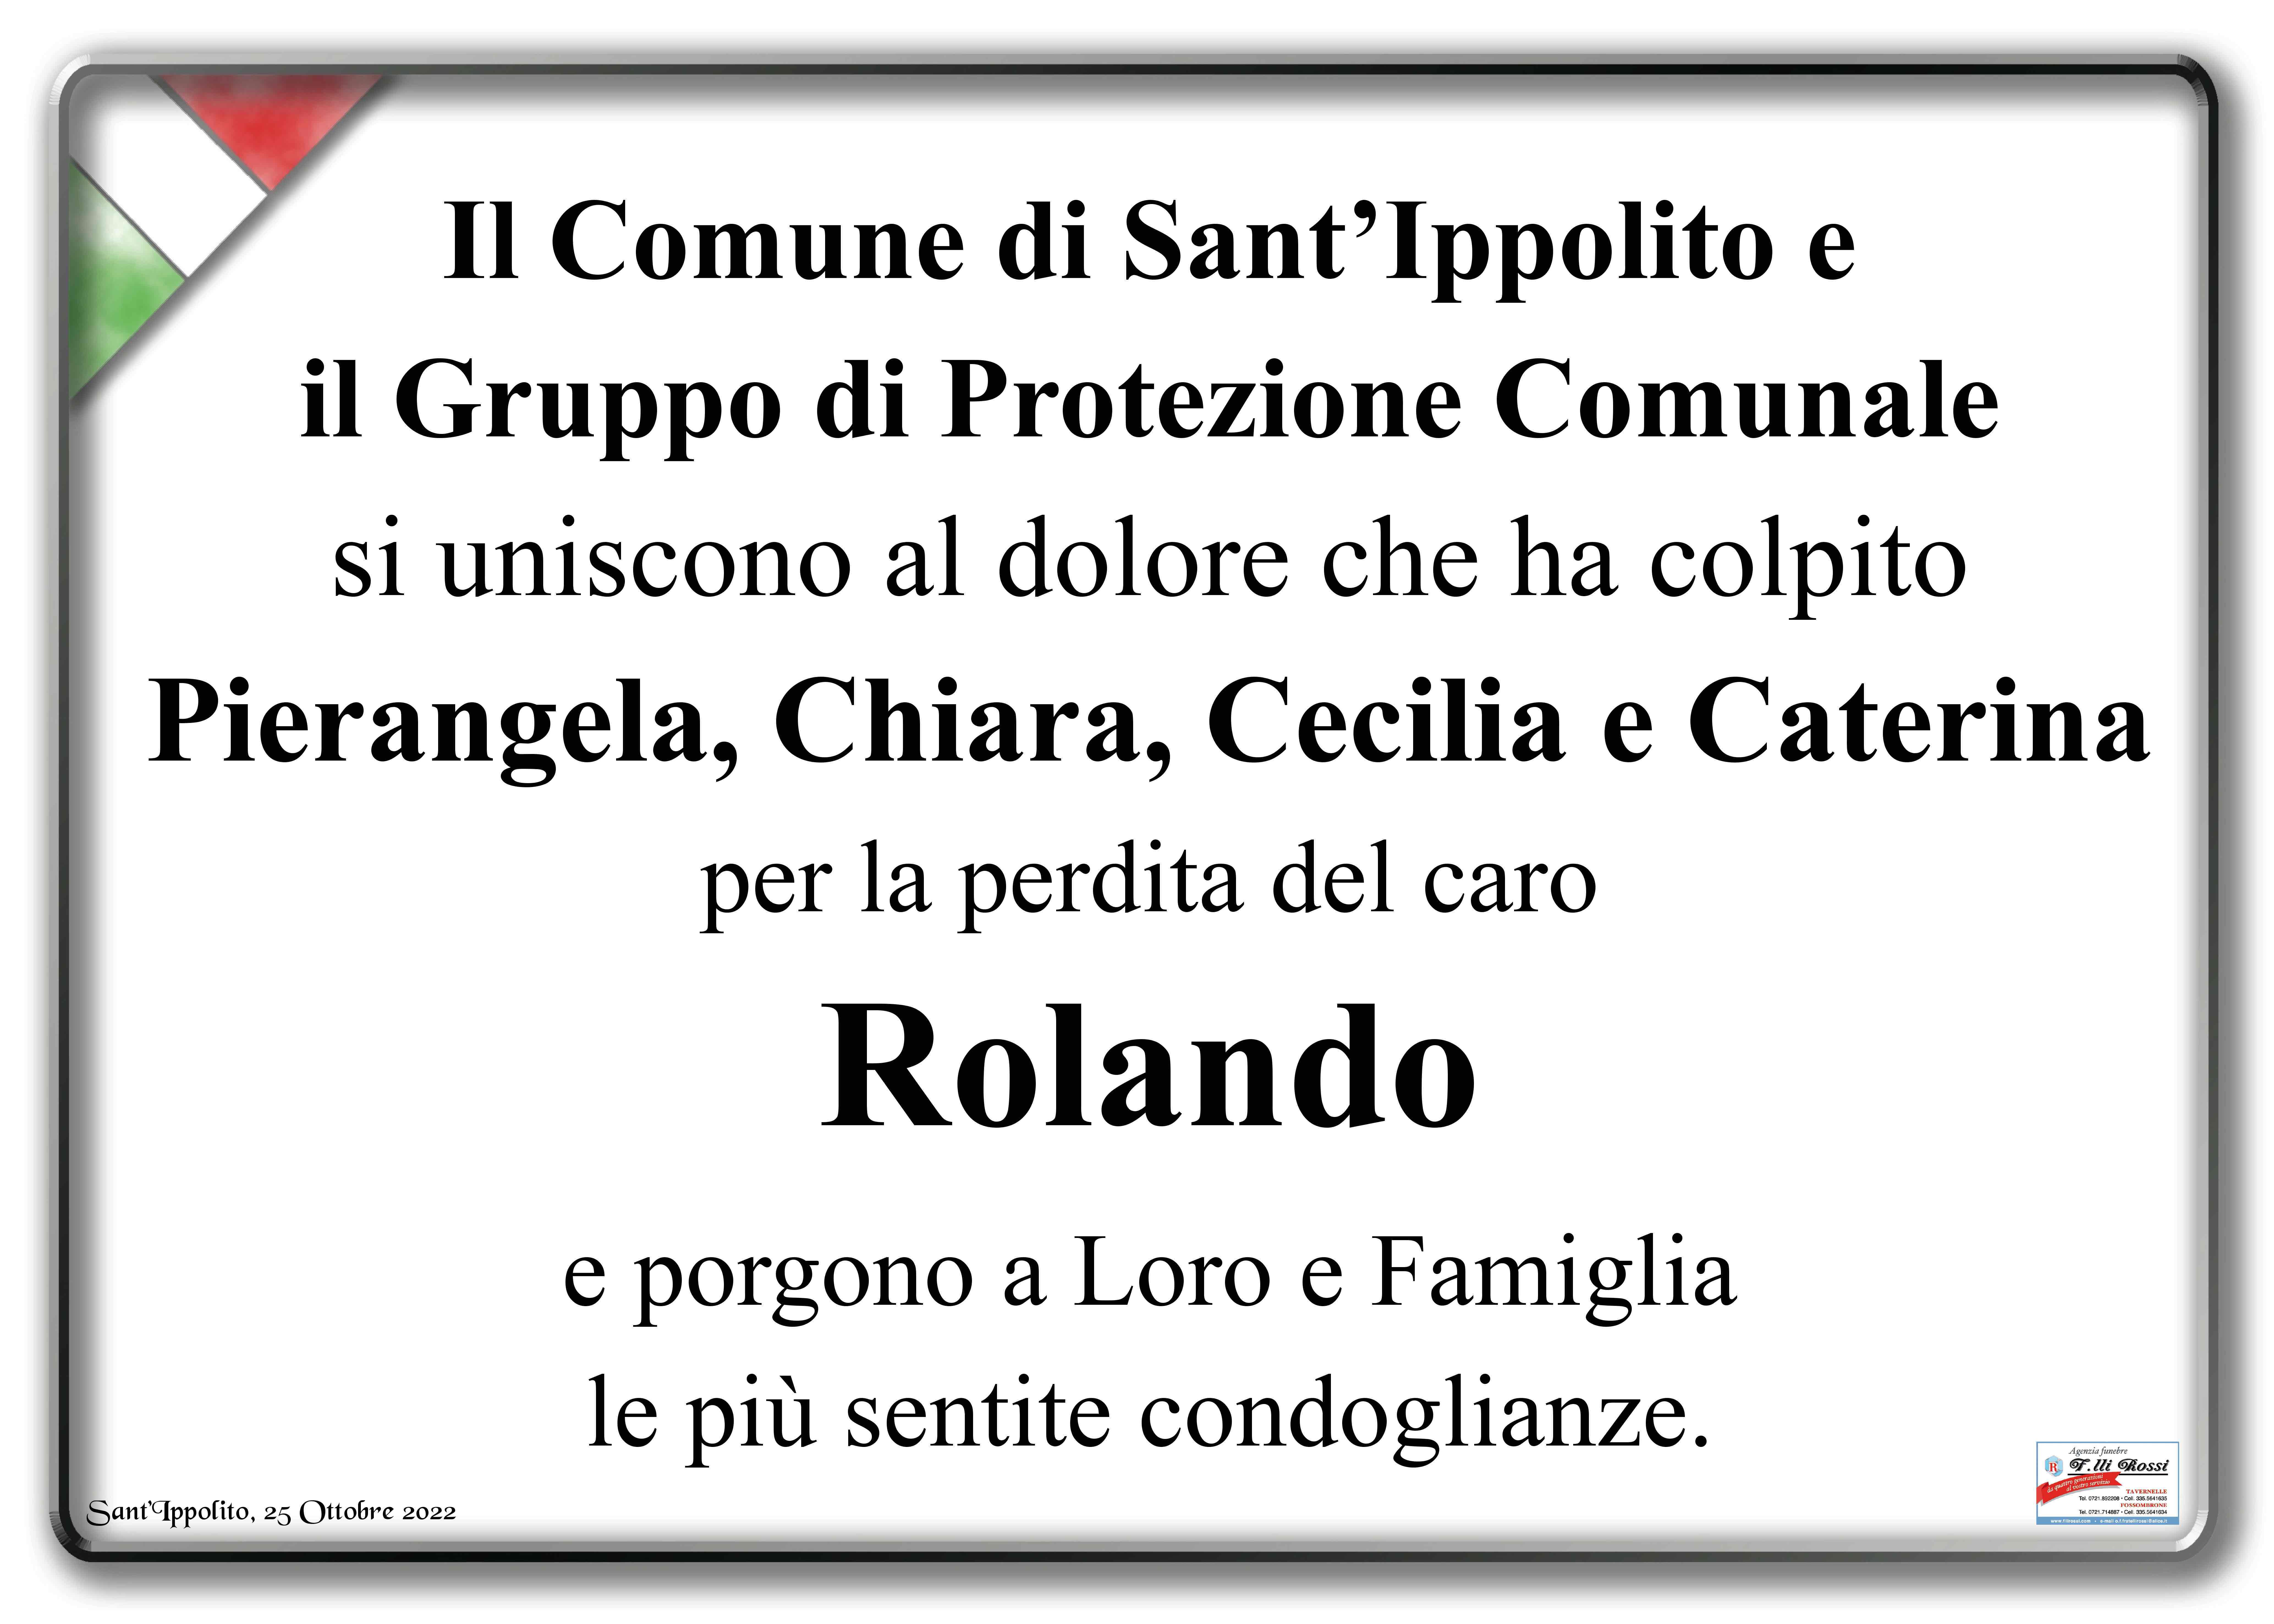 Rolando Cornettone